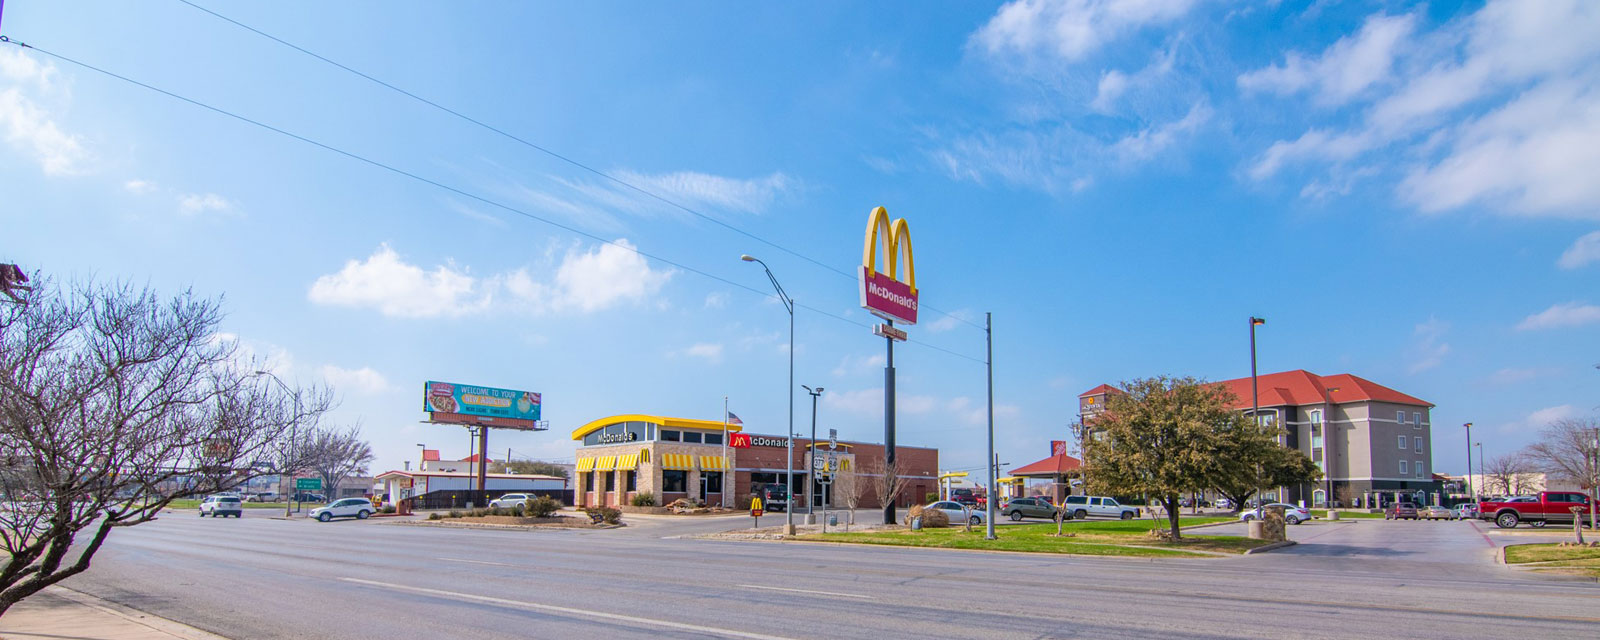 McDonald's fast-food